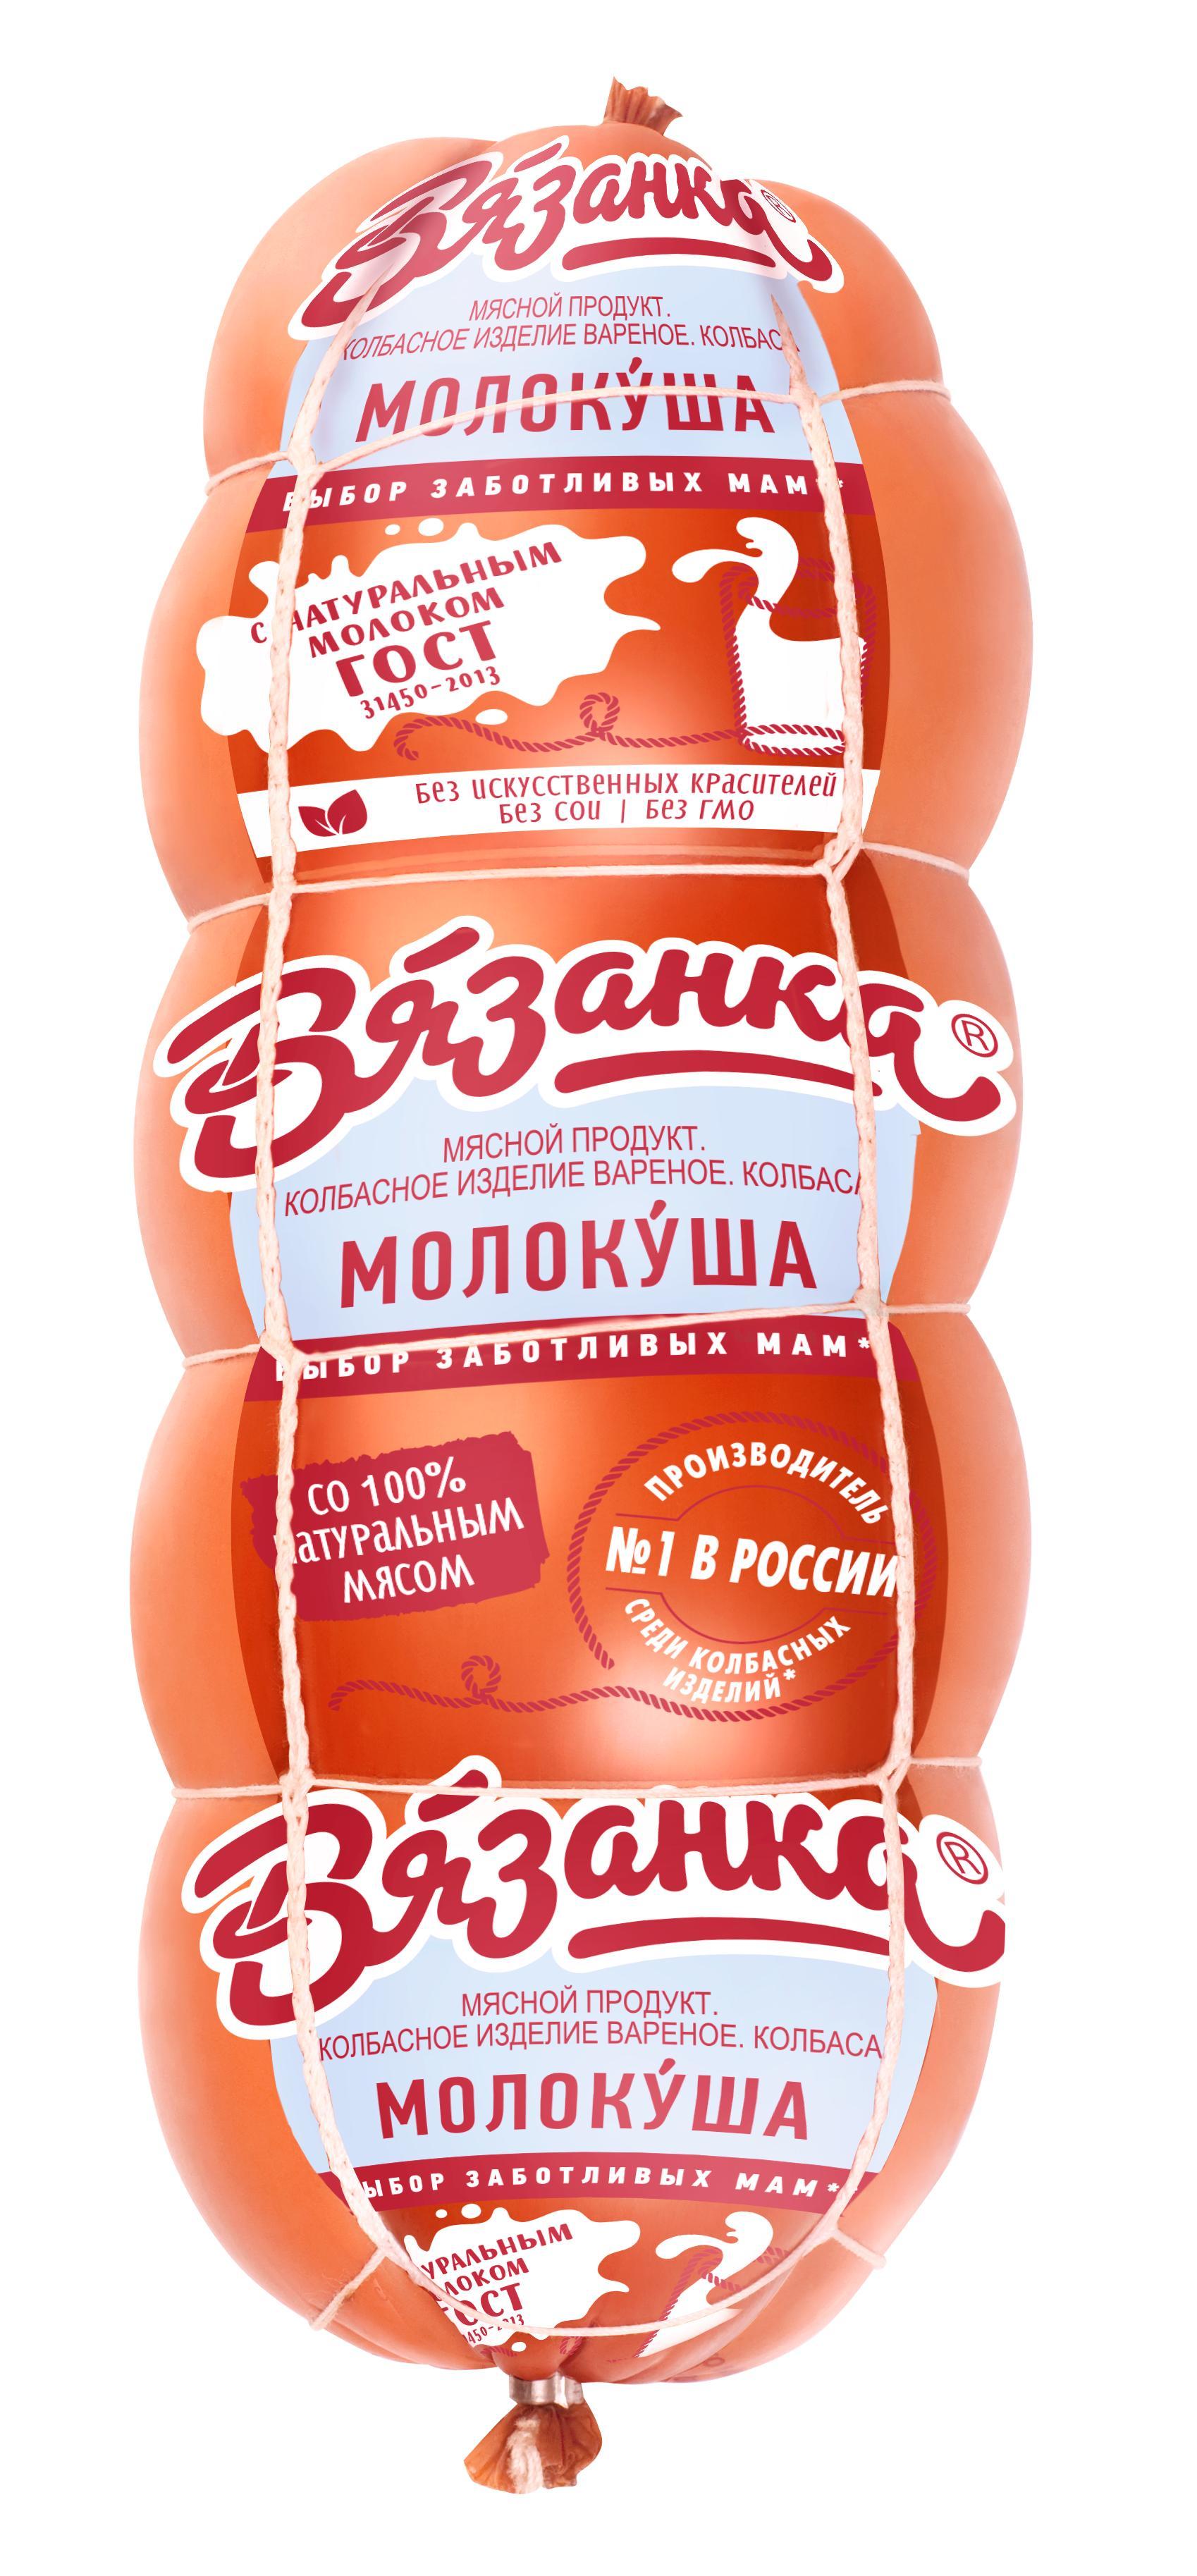 Колбаса Стародворские колбасы ТМ Вязанка  Молокушка, 10,4 кг., оболочка